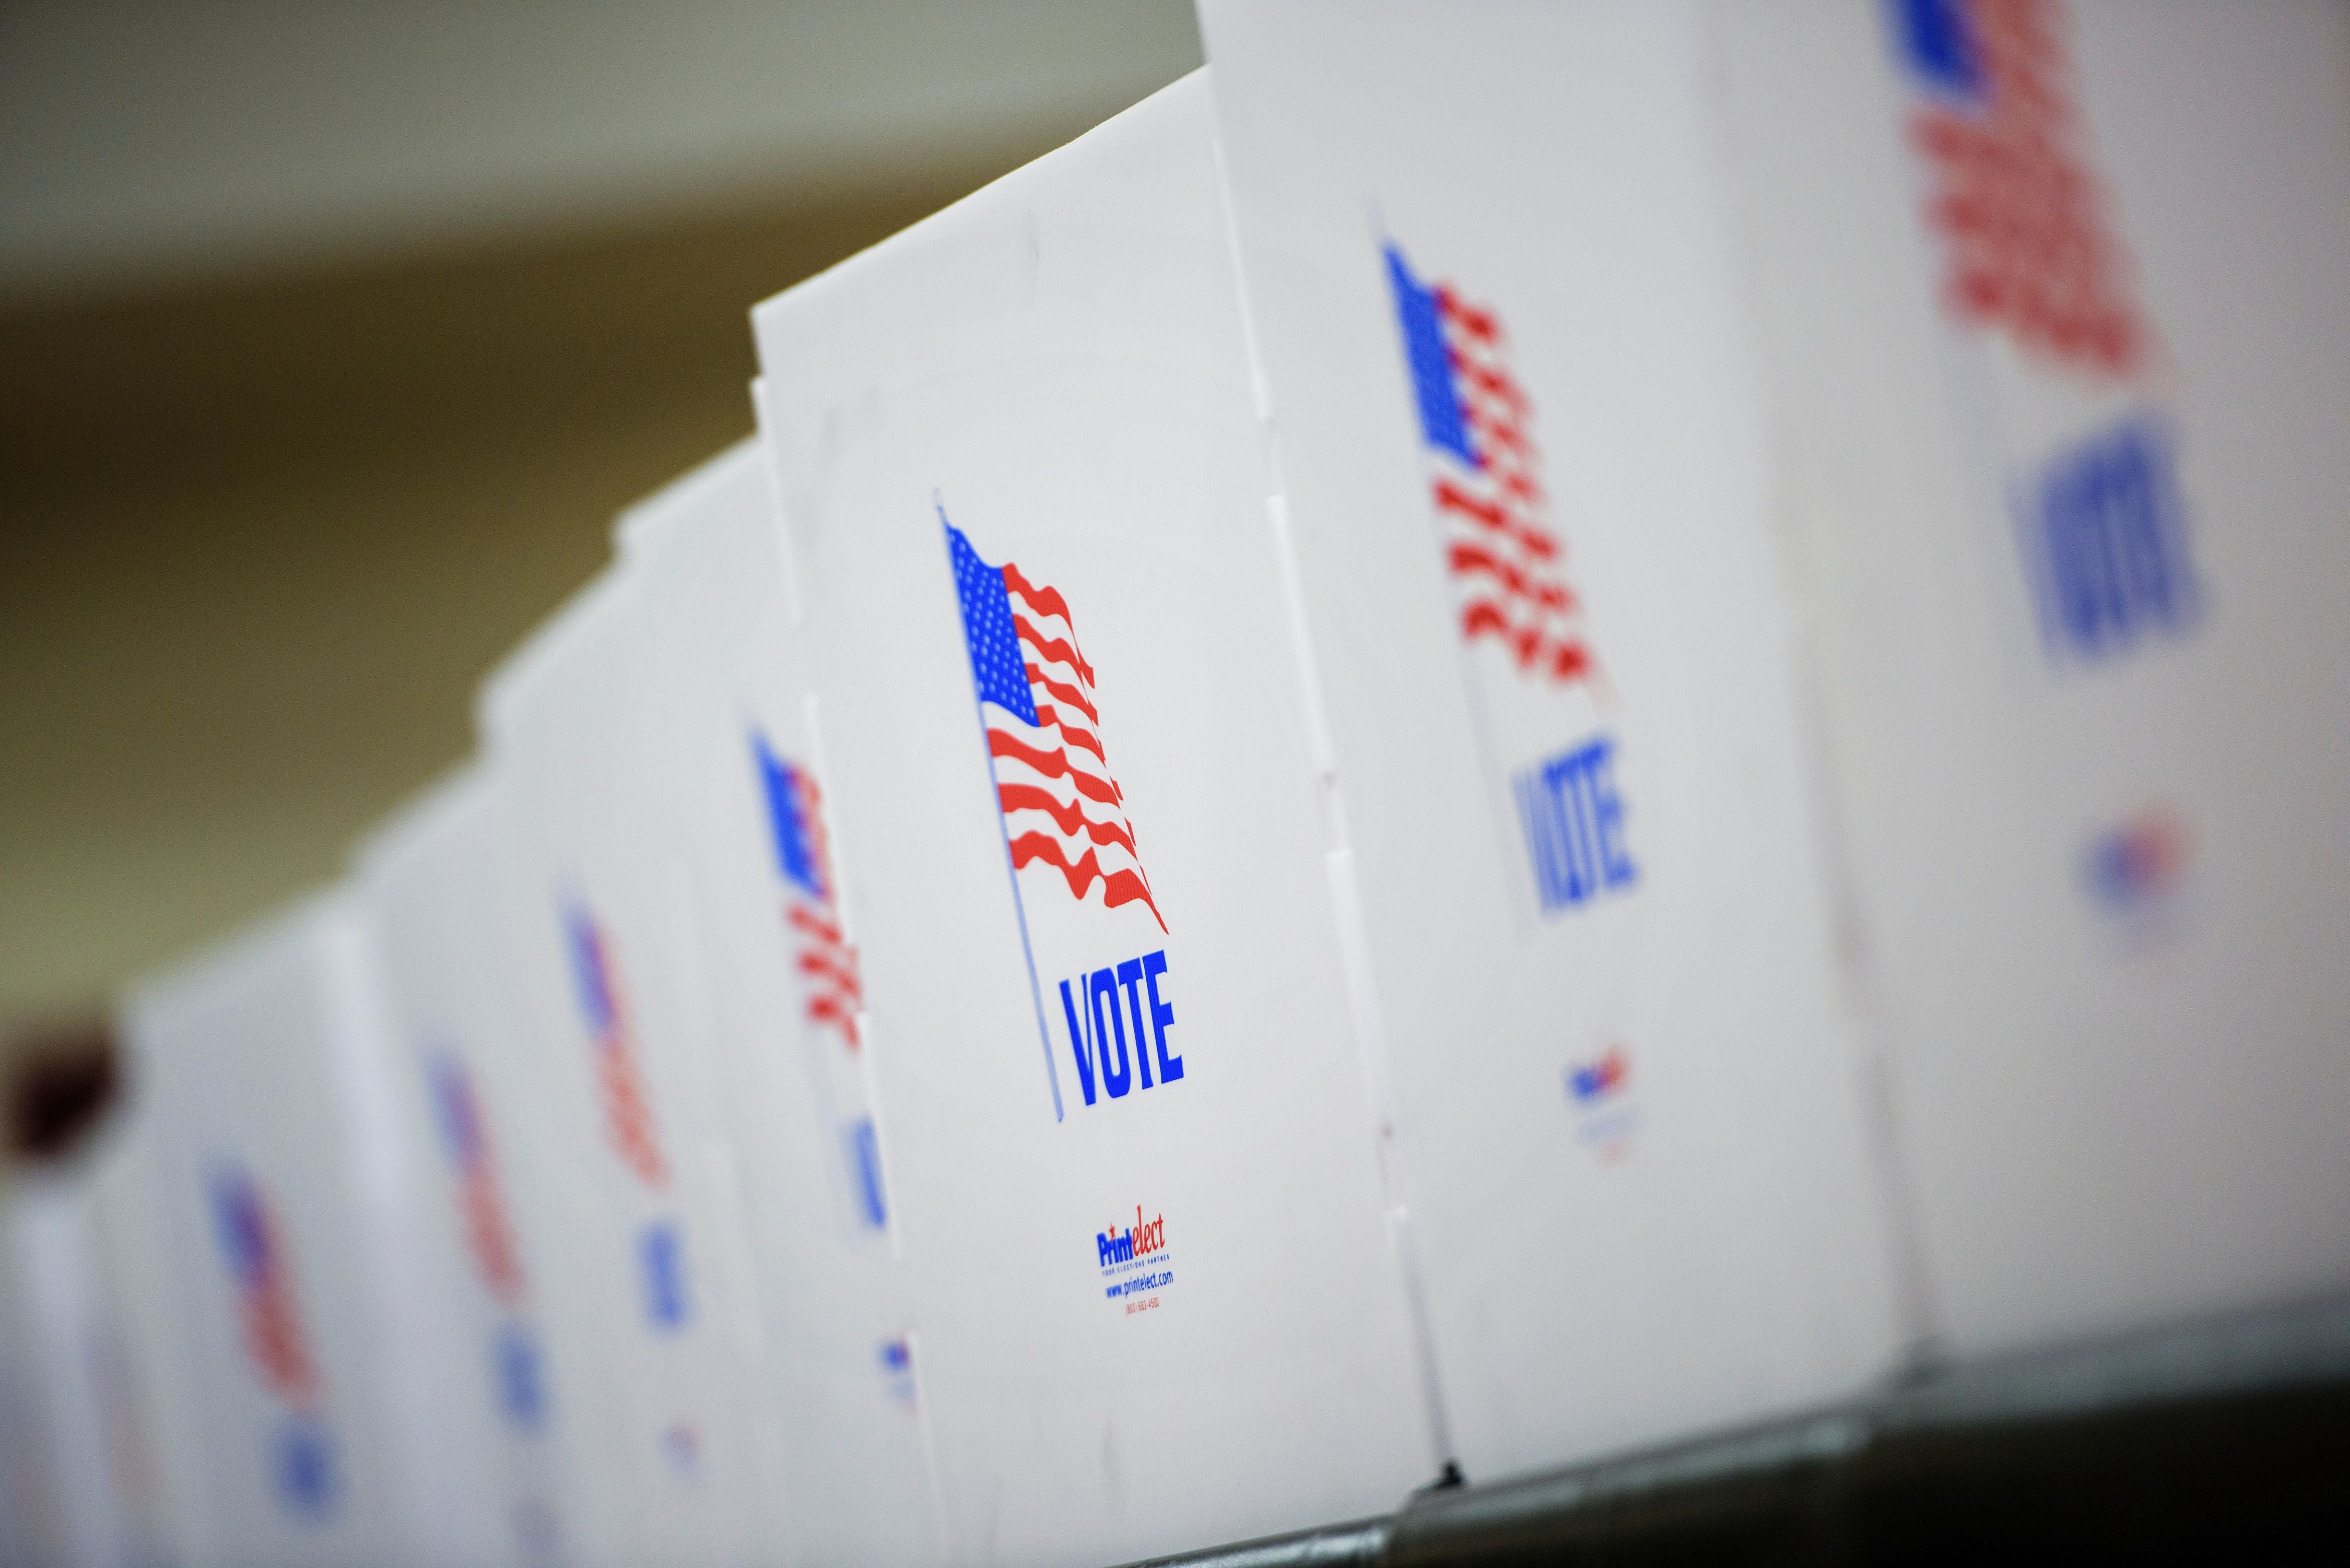 Electoral College Vs Popular Vote: Should The System Change?
